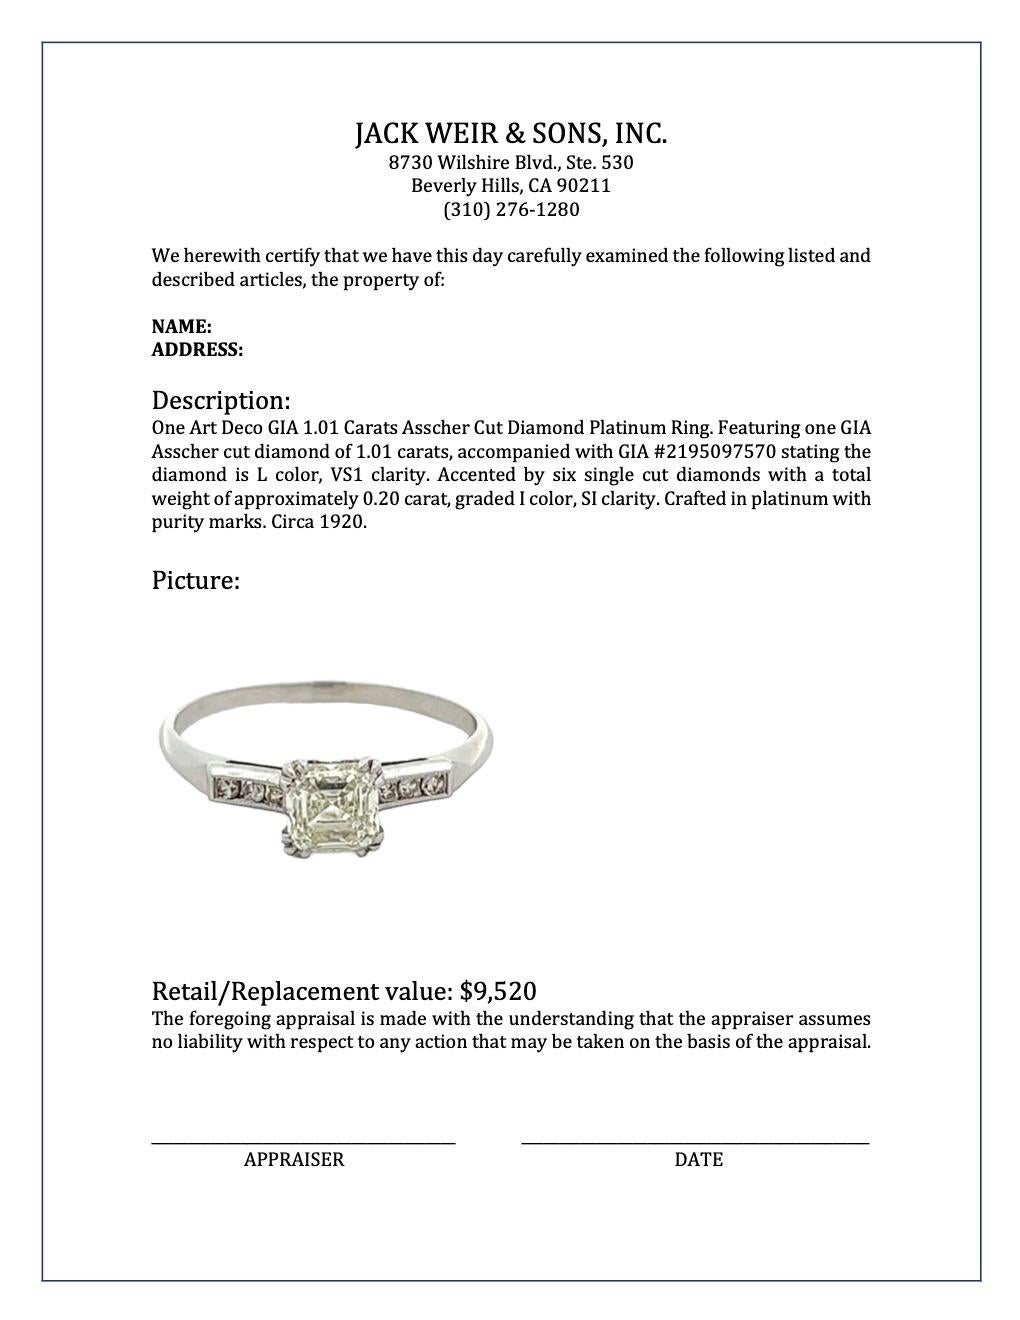 Art Deco GIA 1.01 Carats Asscher Cut Diamond Platinum Ring 4